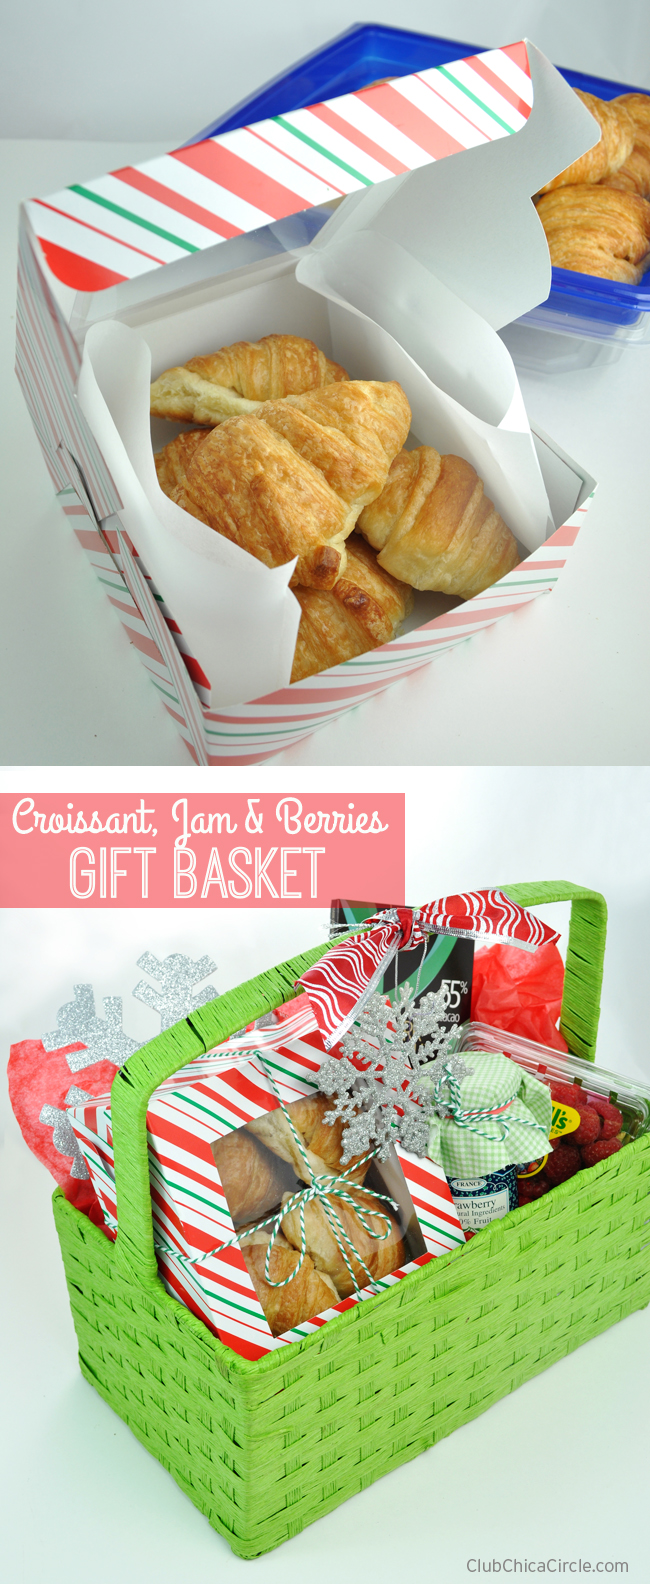 Croissant, Jam & Berries Holiday Gift Basket Idea